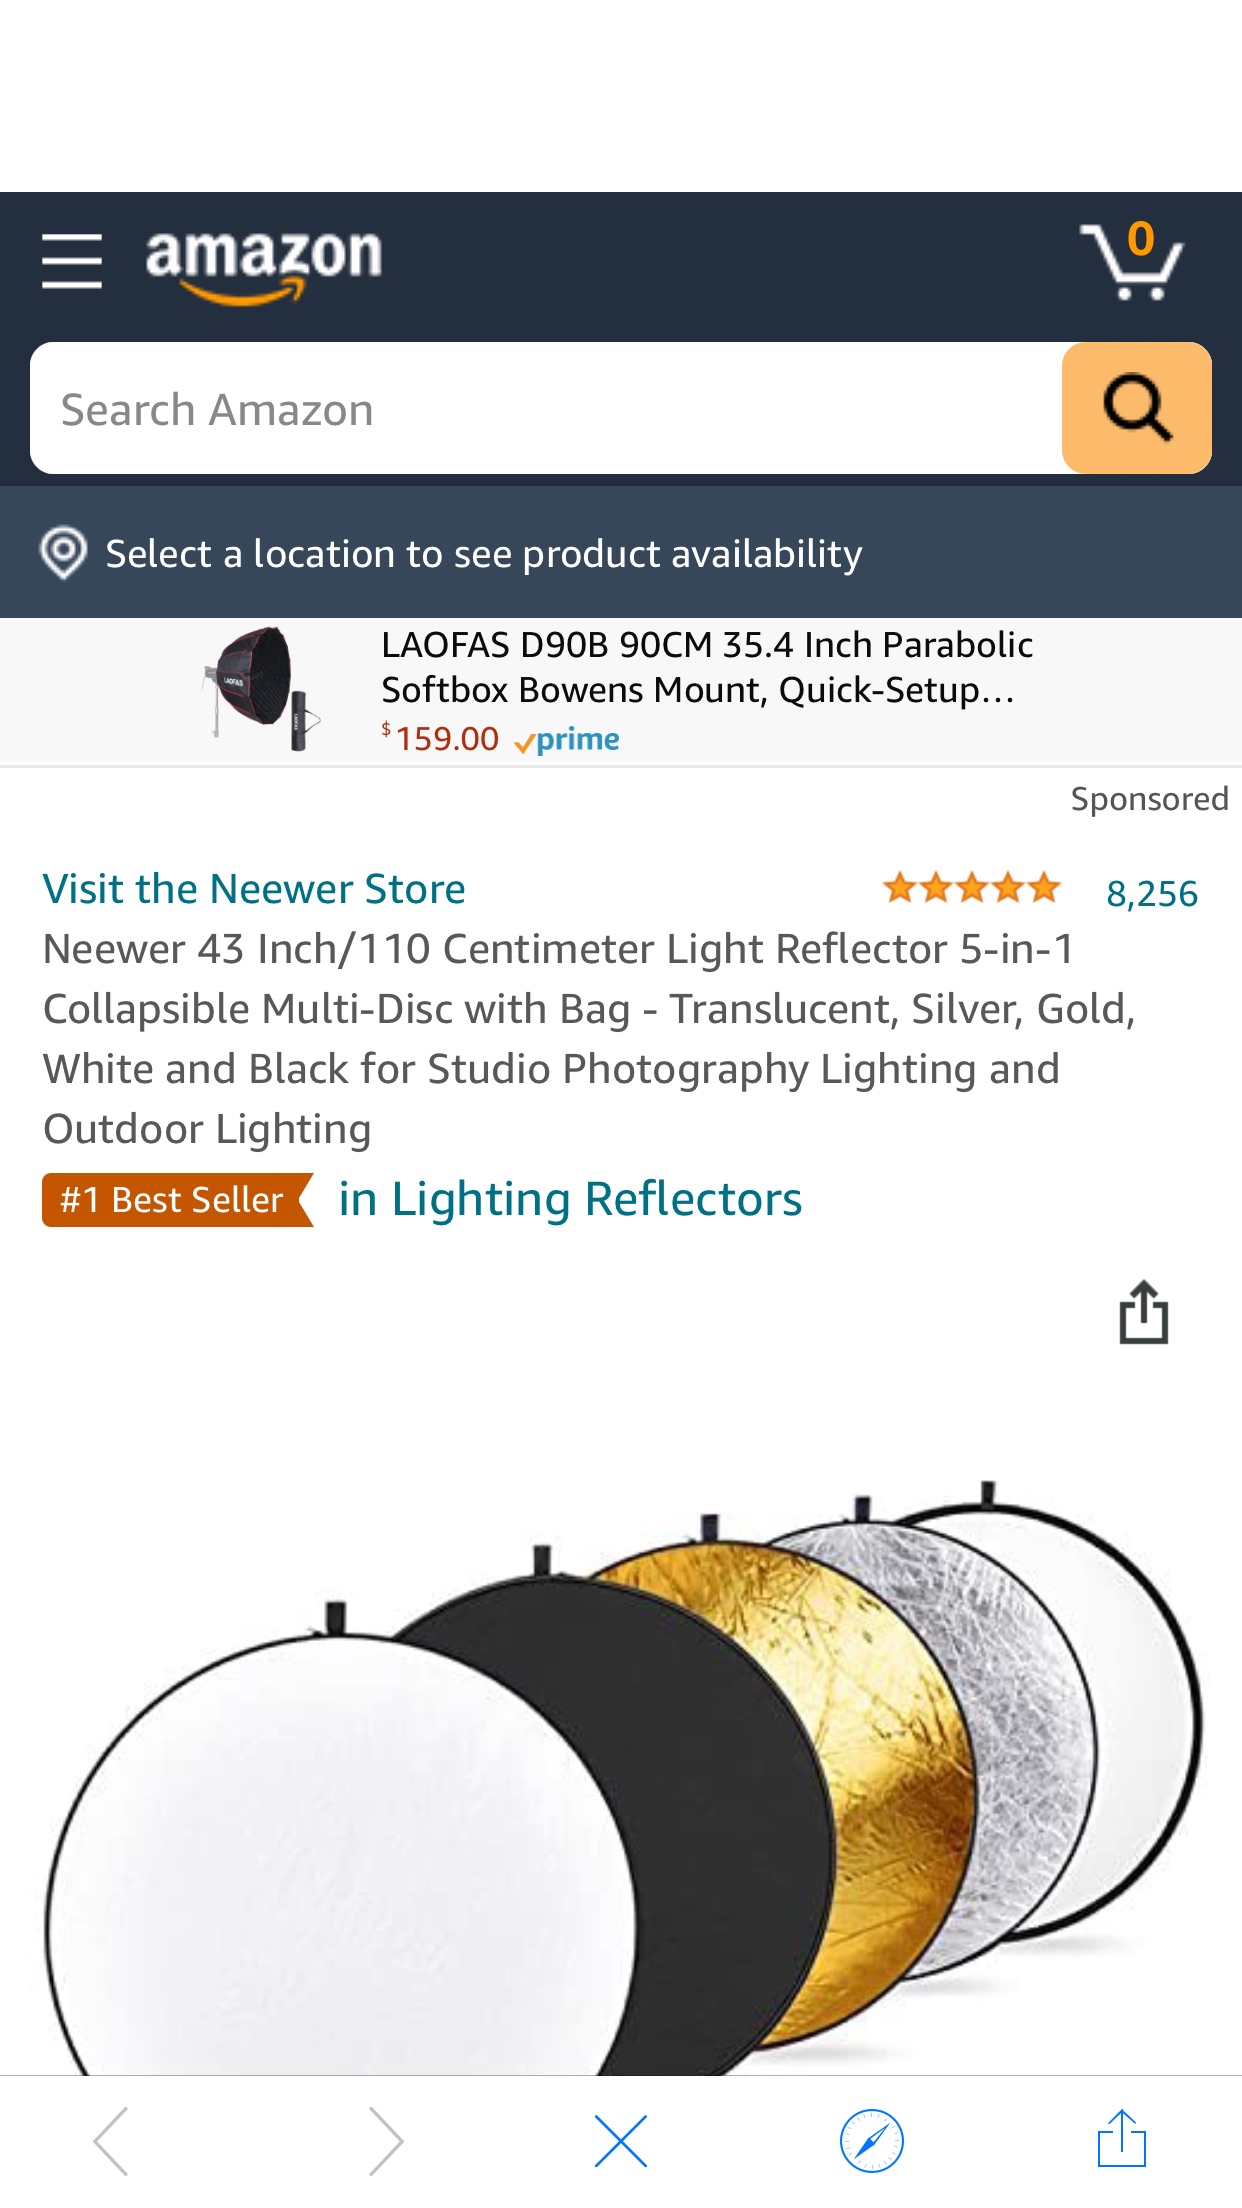 Neewer 43 Inch/110 Centimeter Light Reflector 5-in-1 五色摄影反光遮光板套装